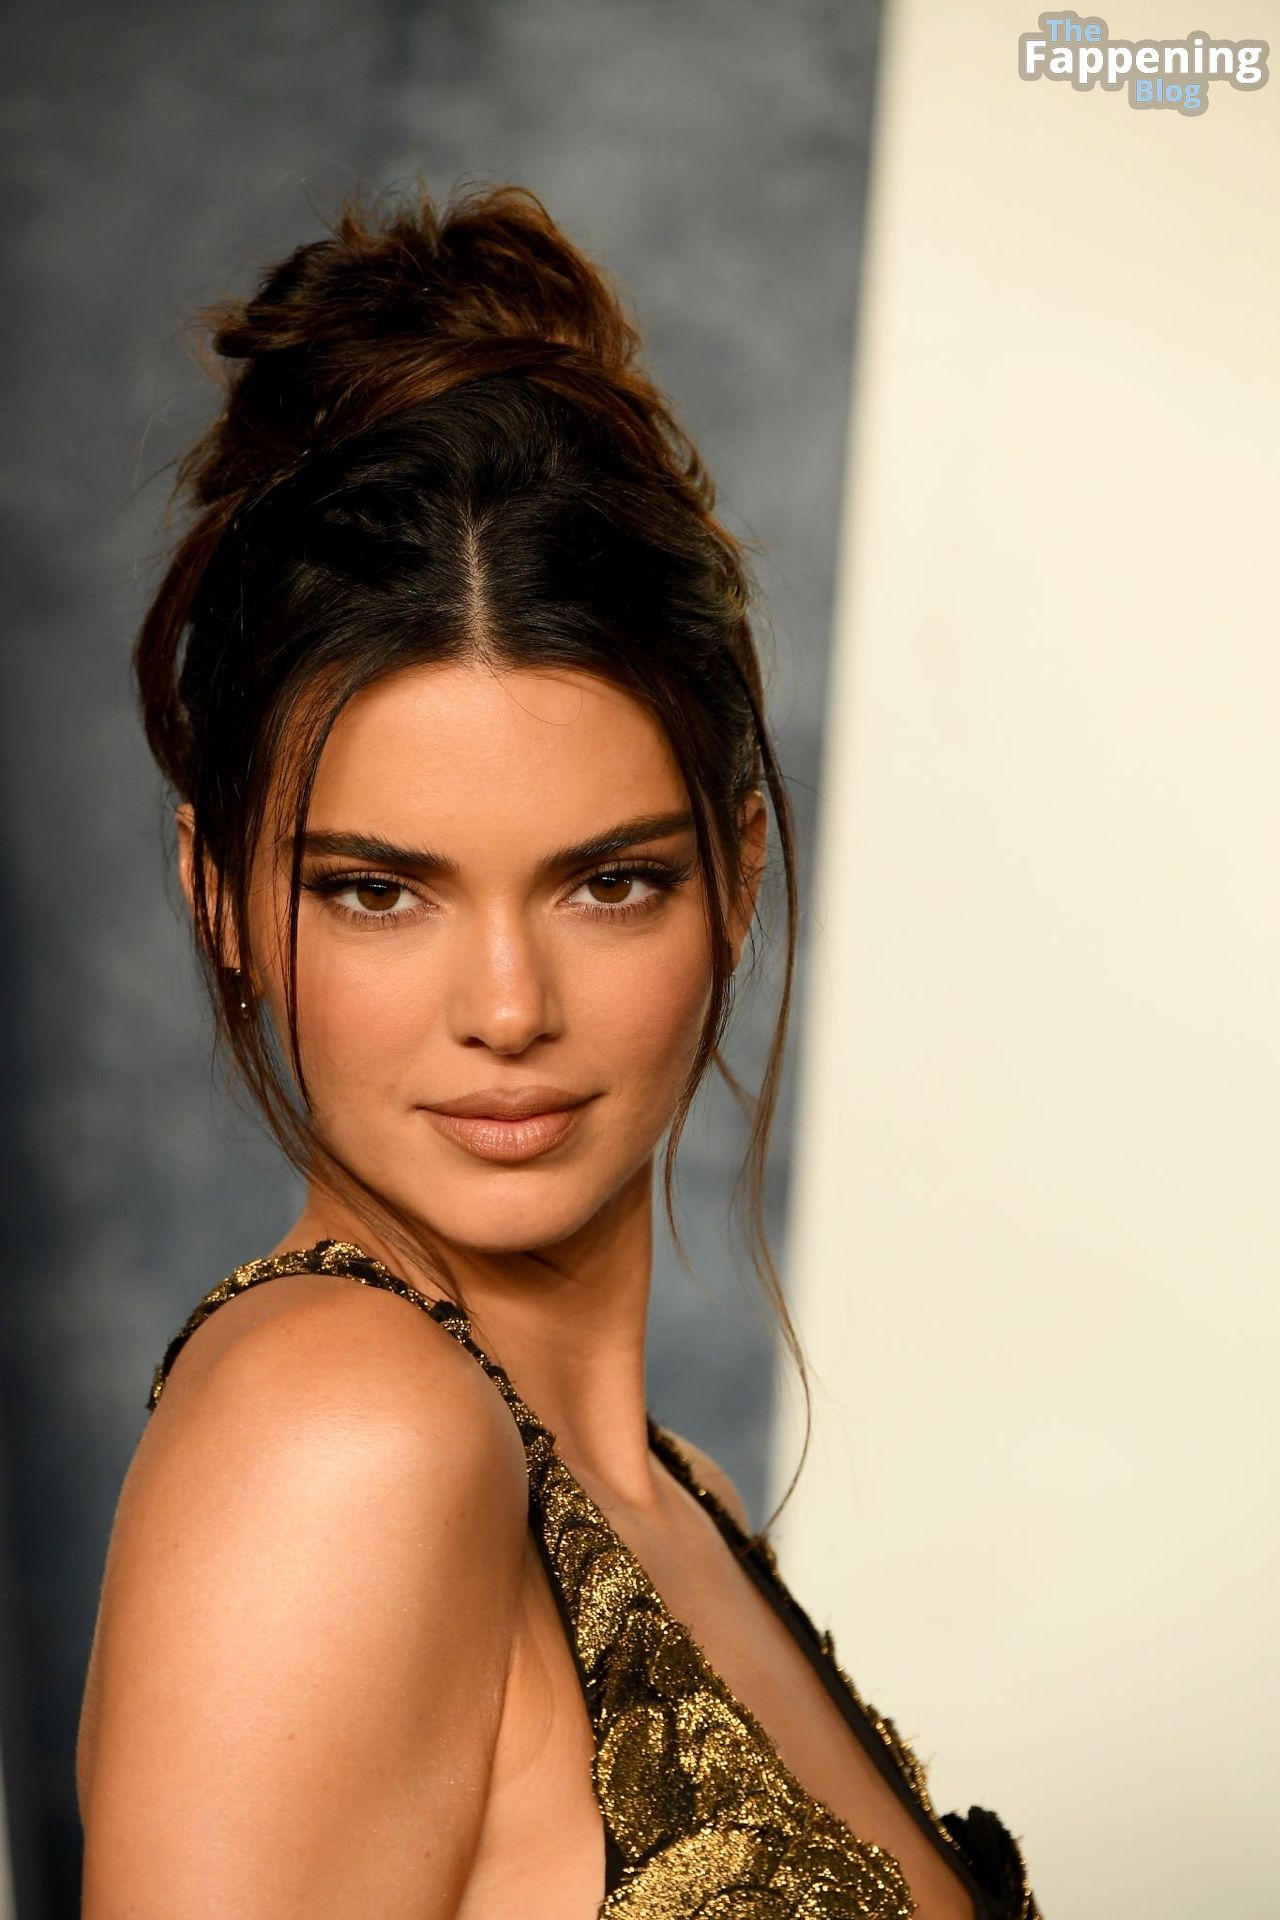 Kendall Jenner Displays Her Elegant Figure at the Vanity Fair Oscar Party (108 Photos)